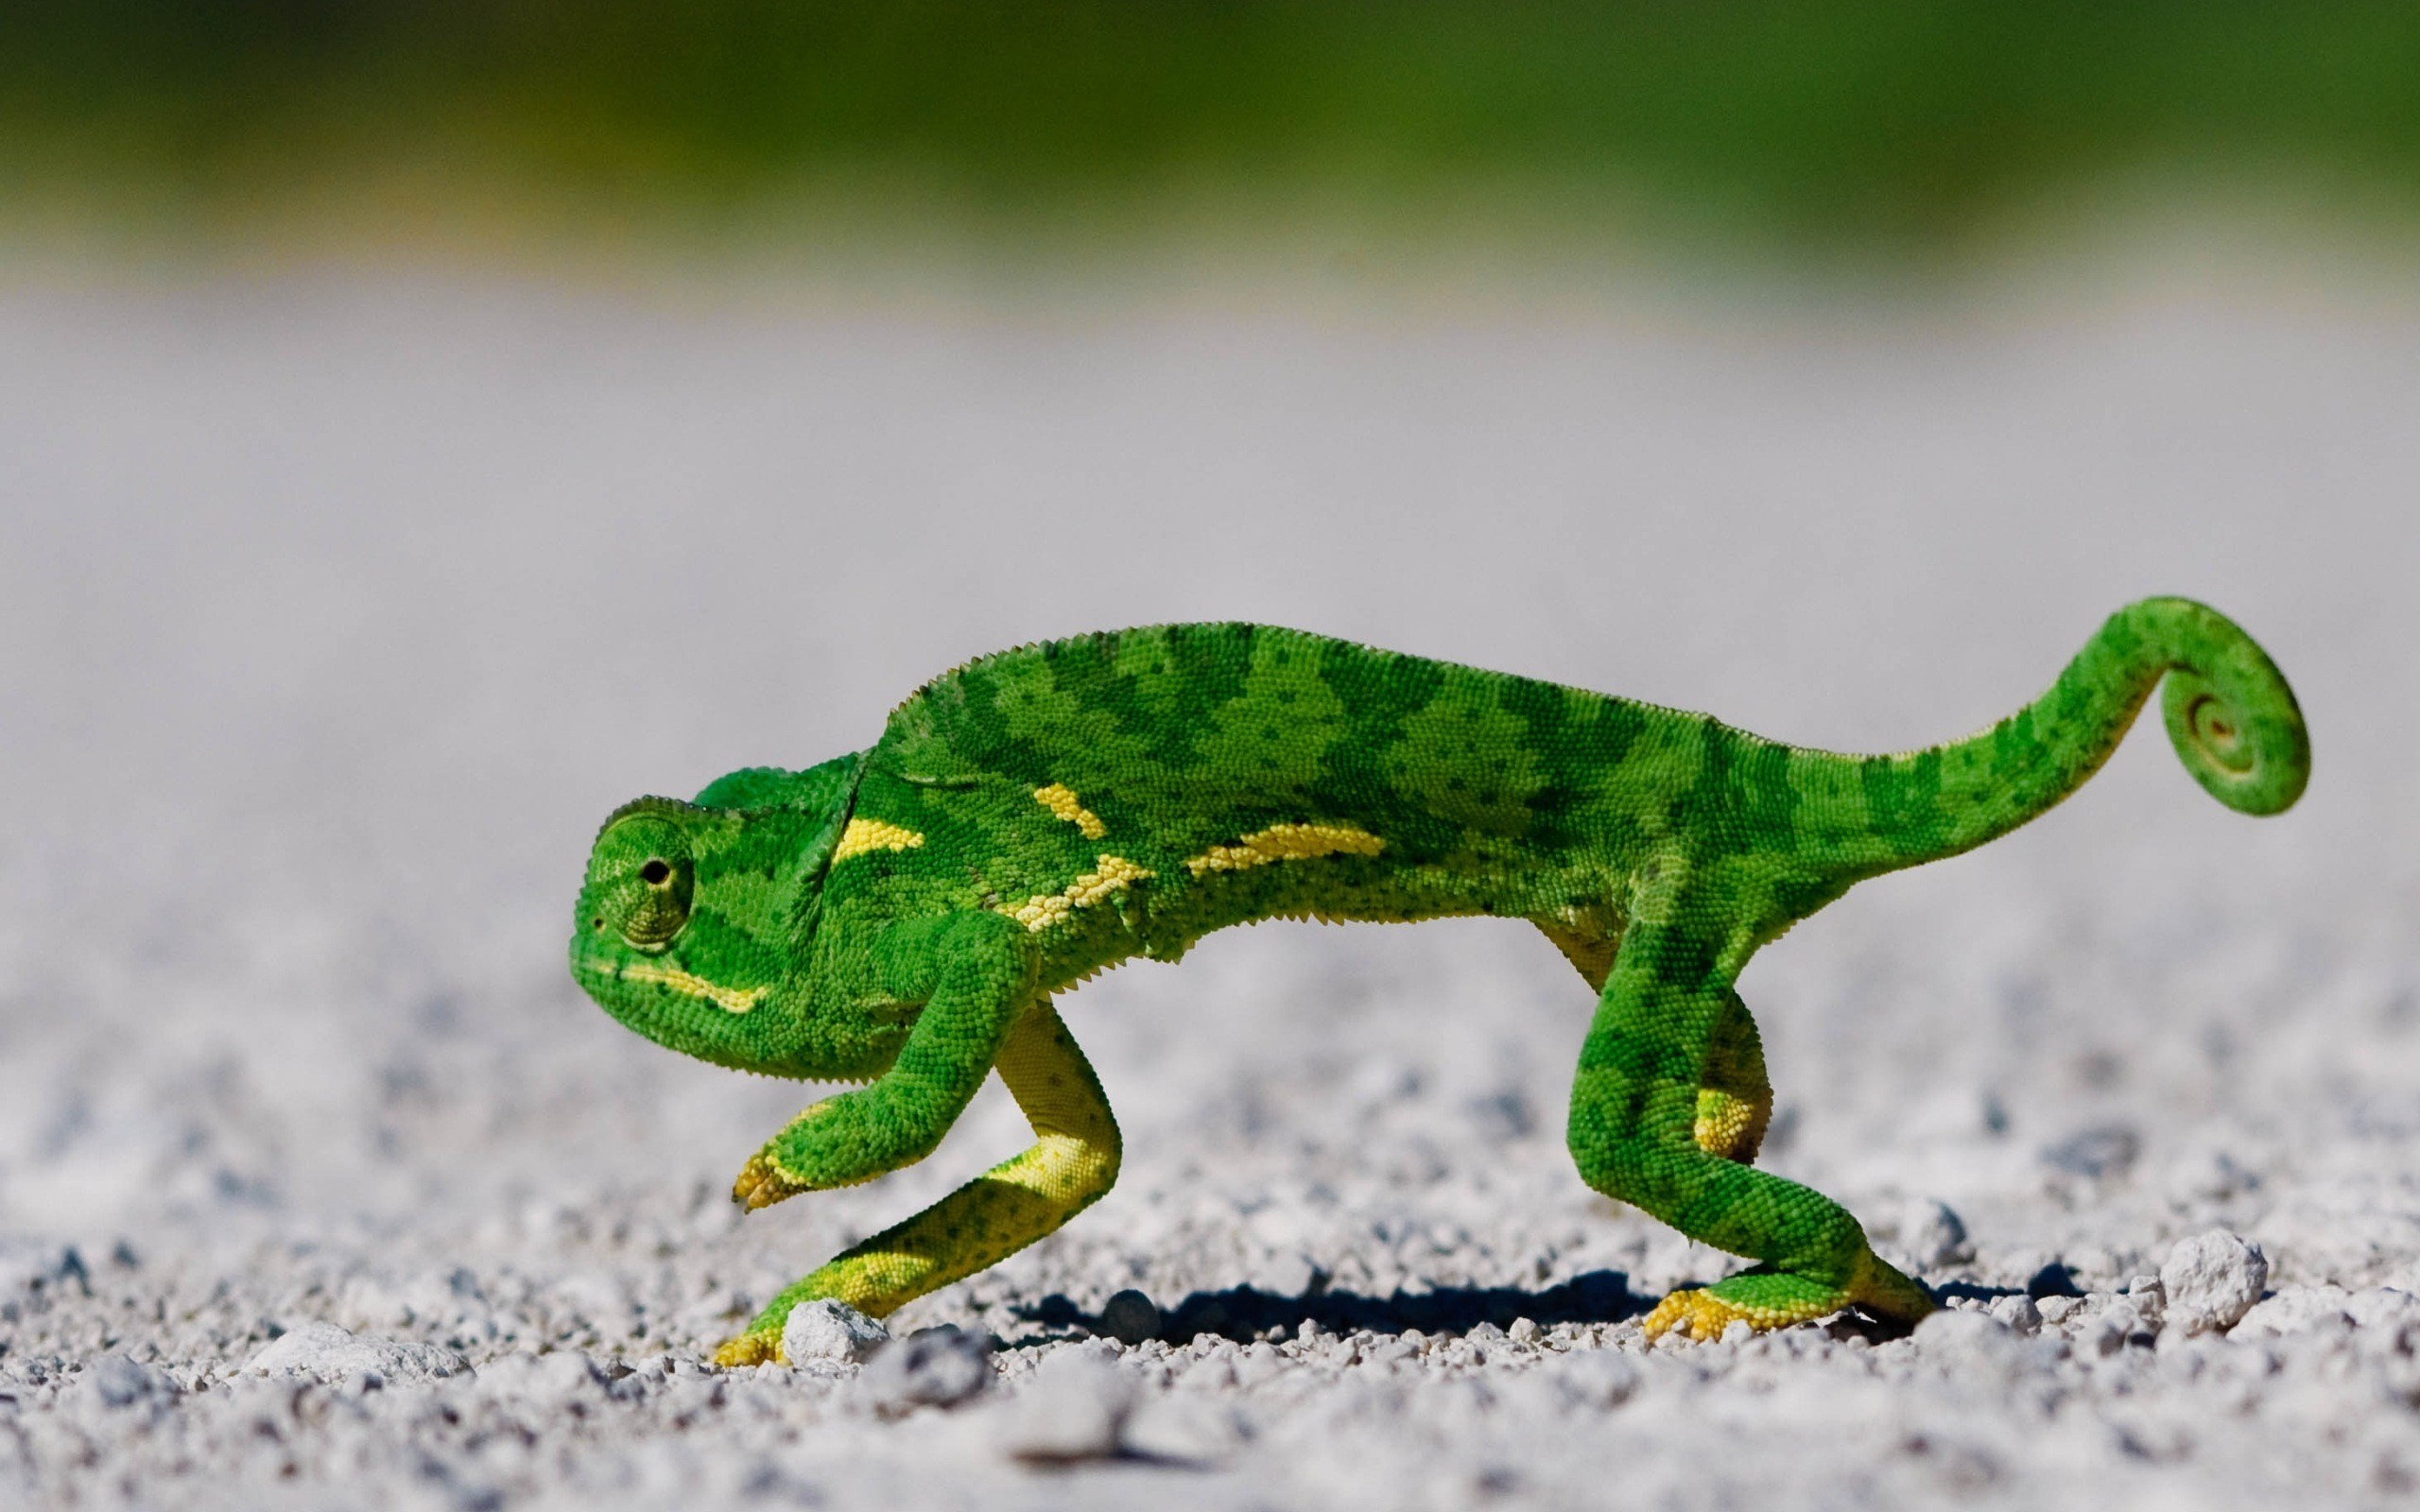 General 2560x1600 animals gecko green closeup